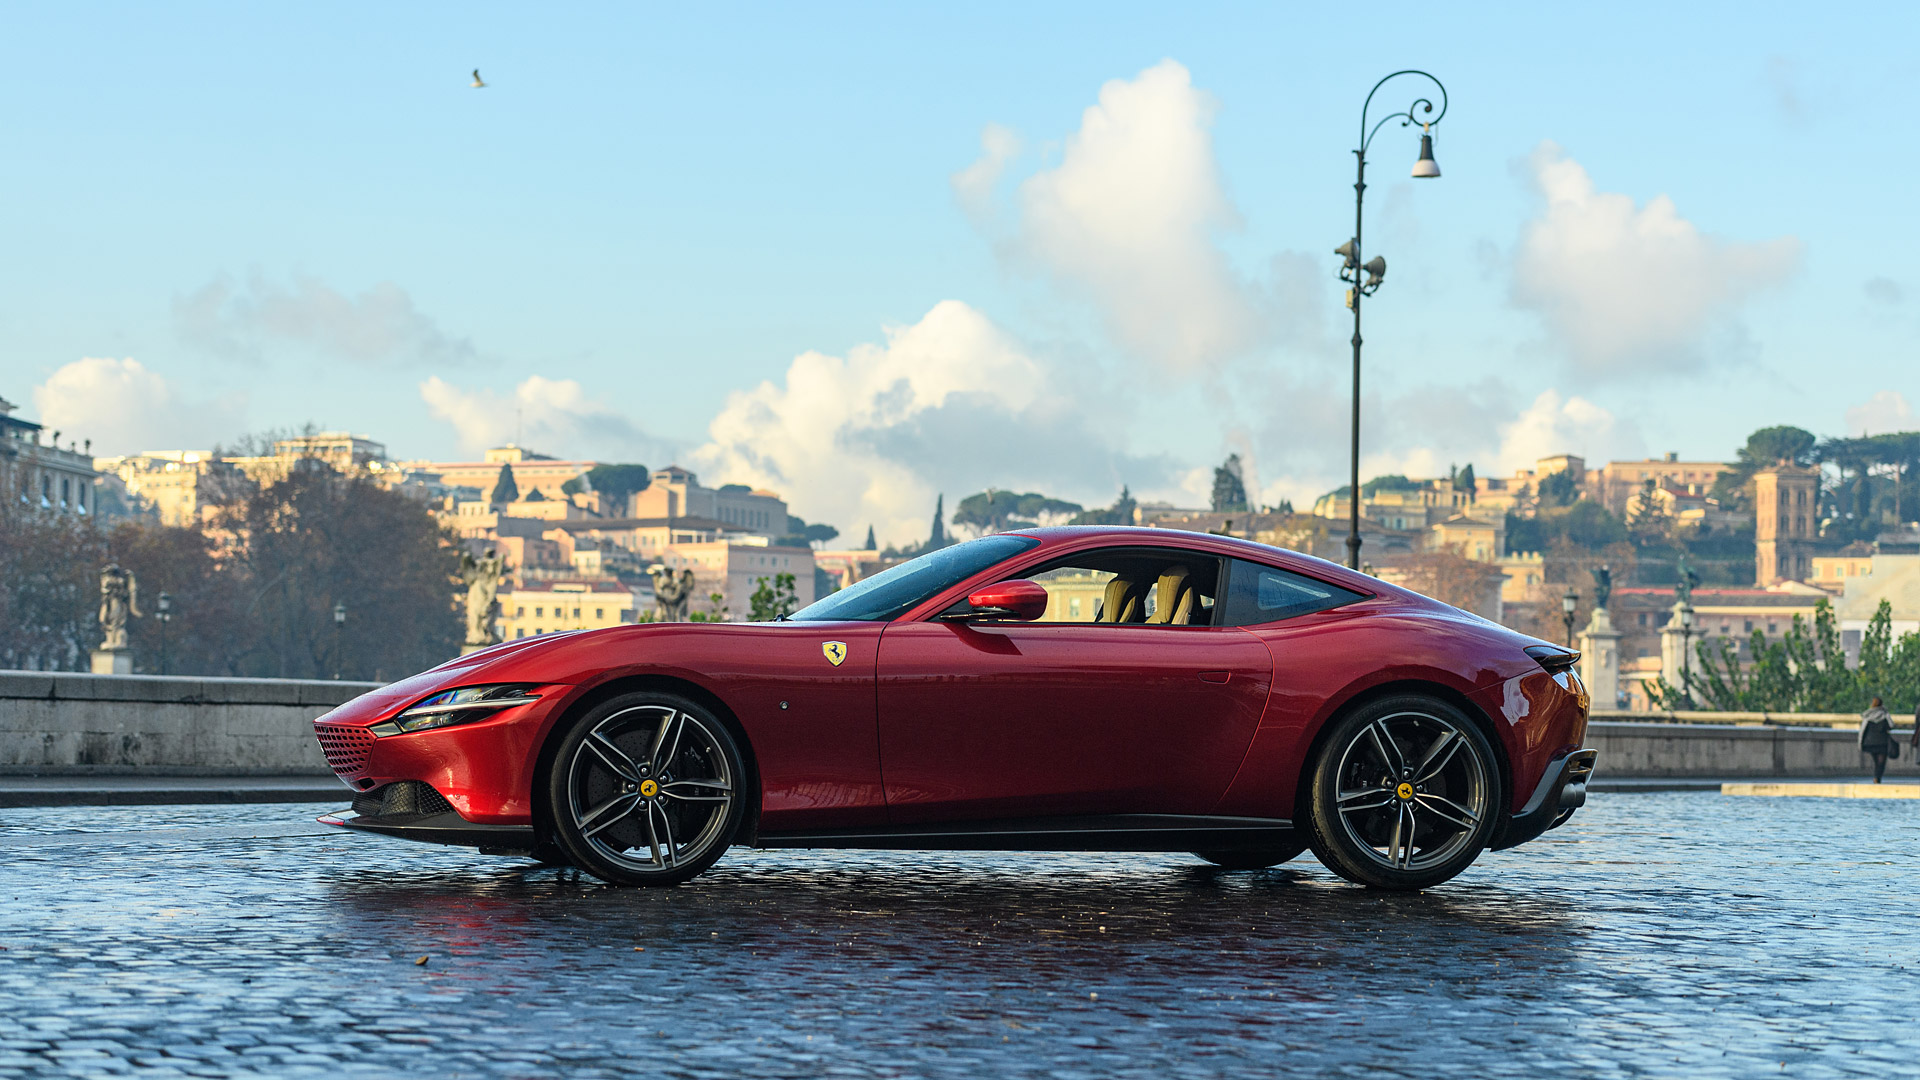  2020 Ferrari Roma Wallpaper.